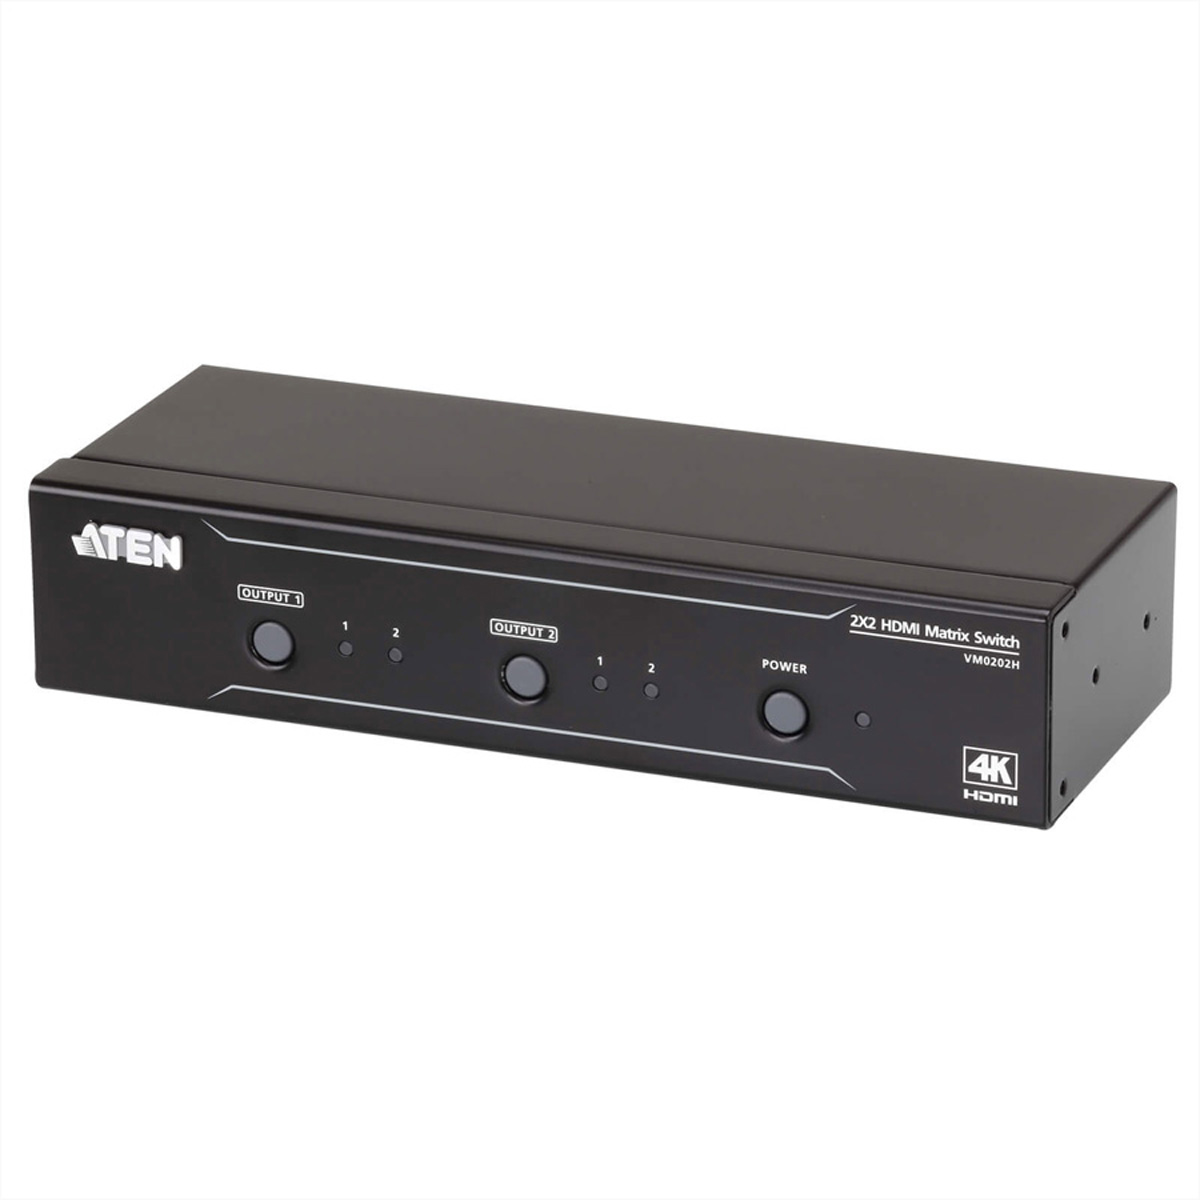 ATEN VM0202H 2 x 2 4K HDMI Audio/Video Matrix Switch